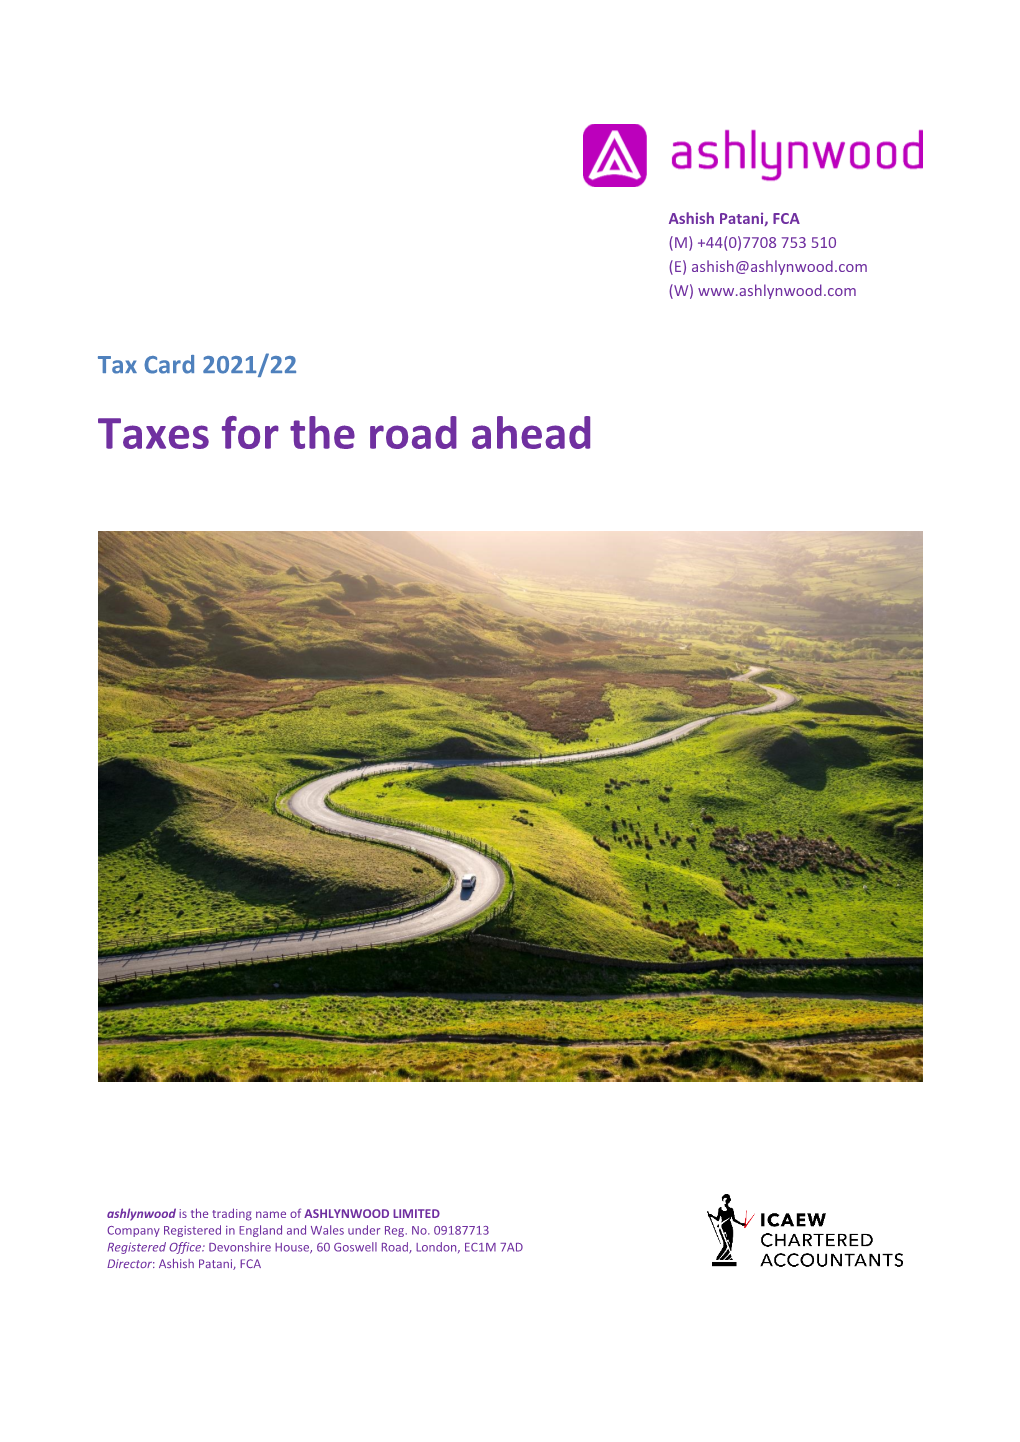 Tax Card 2021/22 Taxes for the Road Ahead